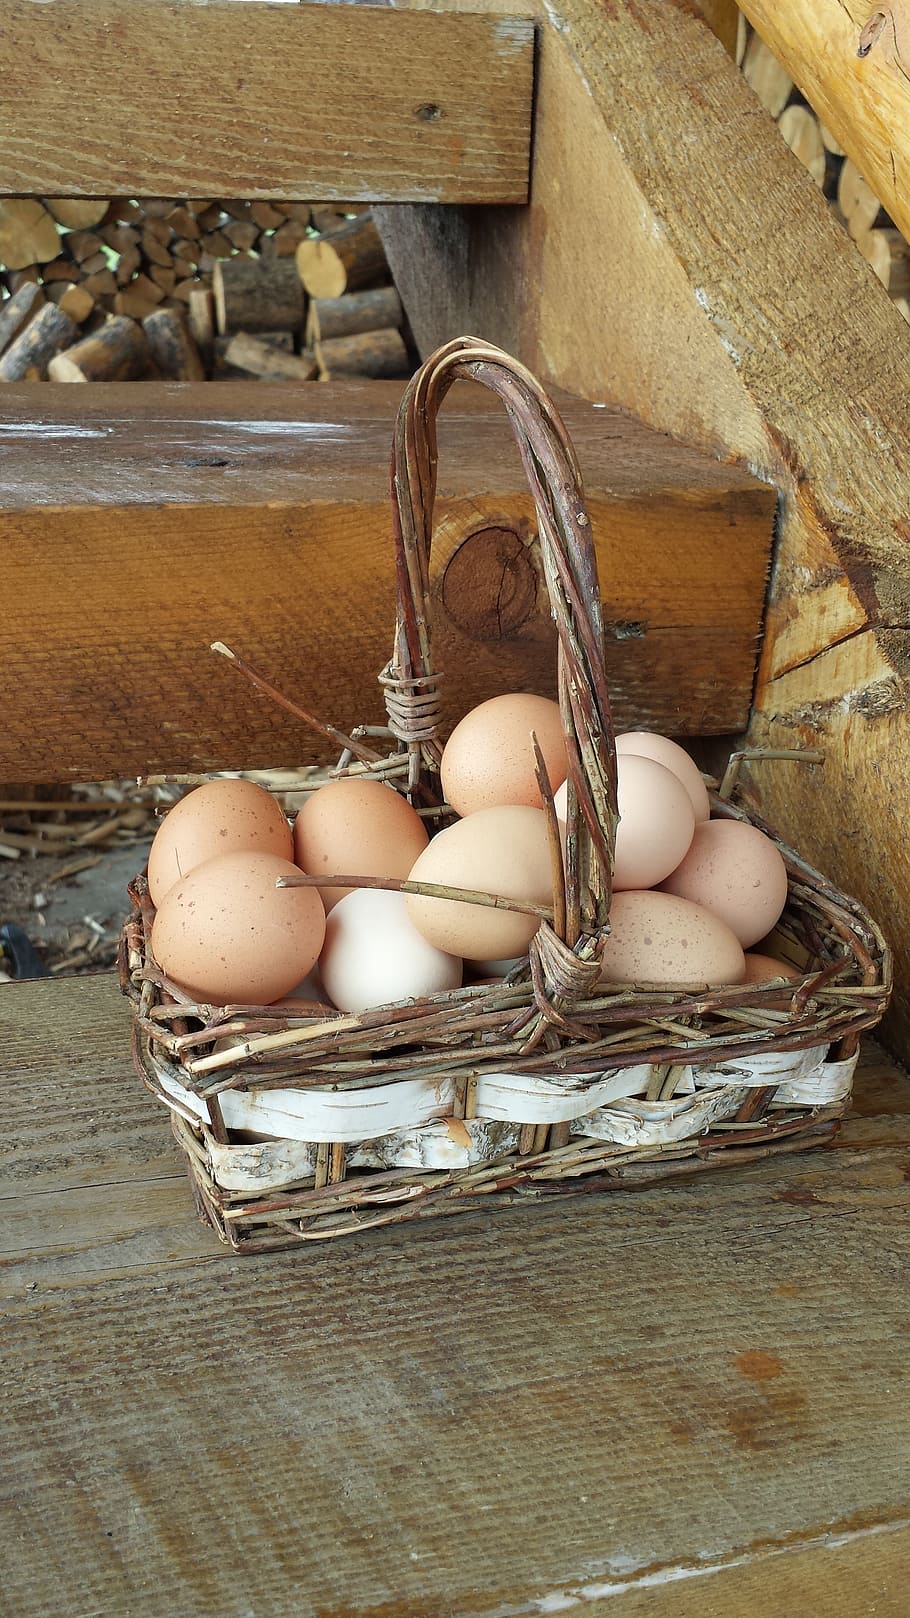 eggs in one basket, farm, chickens, brown eggs, wicker basket